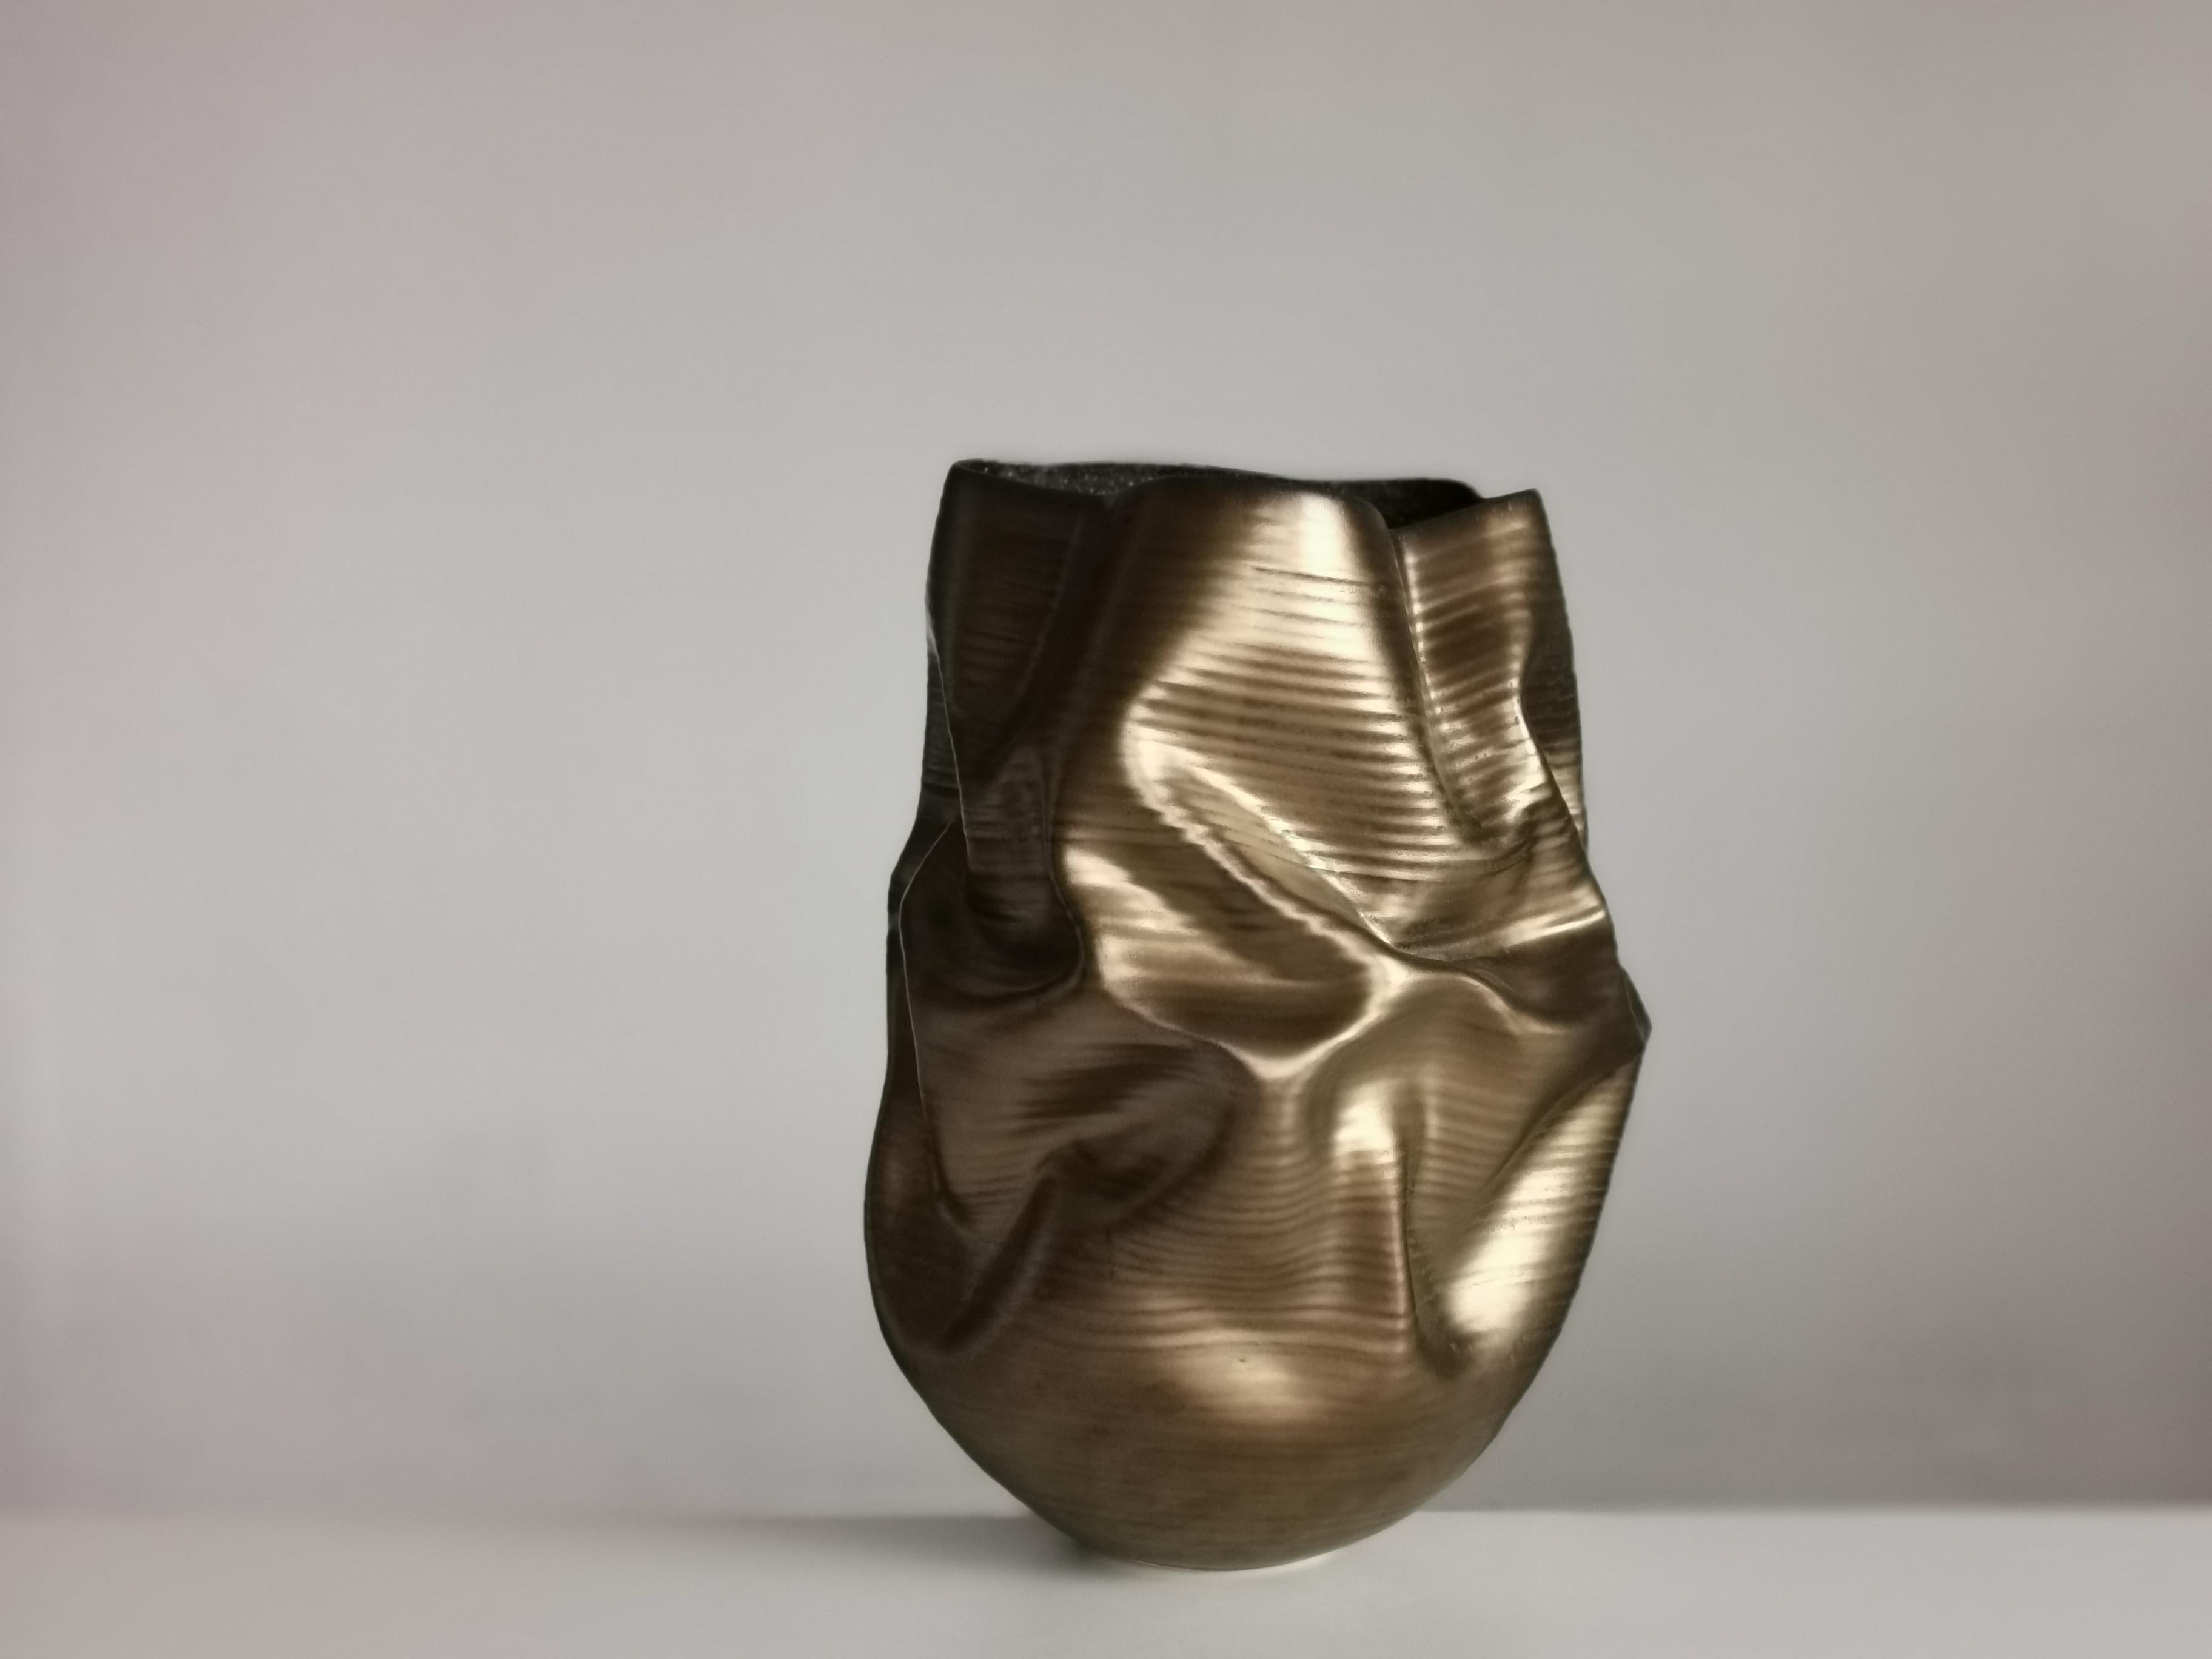 Other Gold Crumpled Form, Unique Ceramic Sculpture Vessel N.76